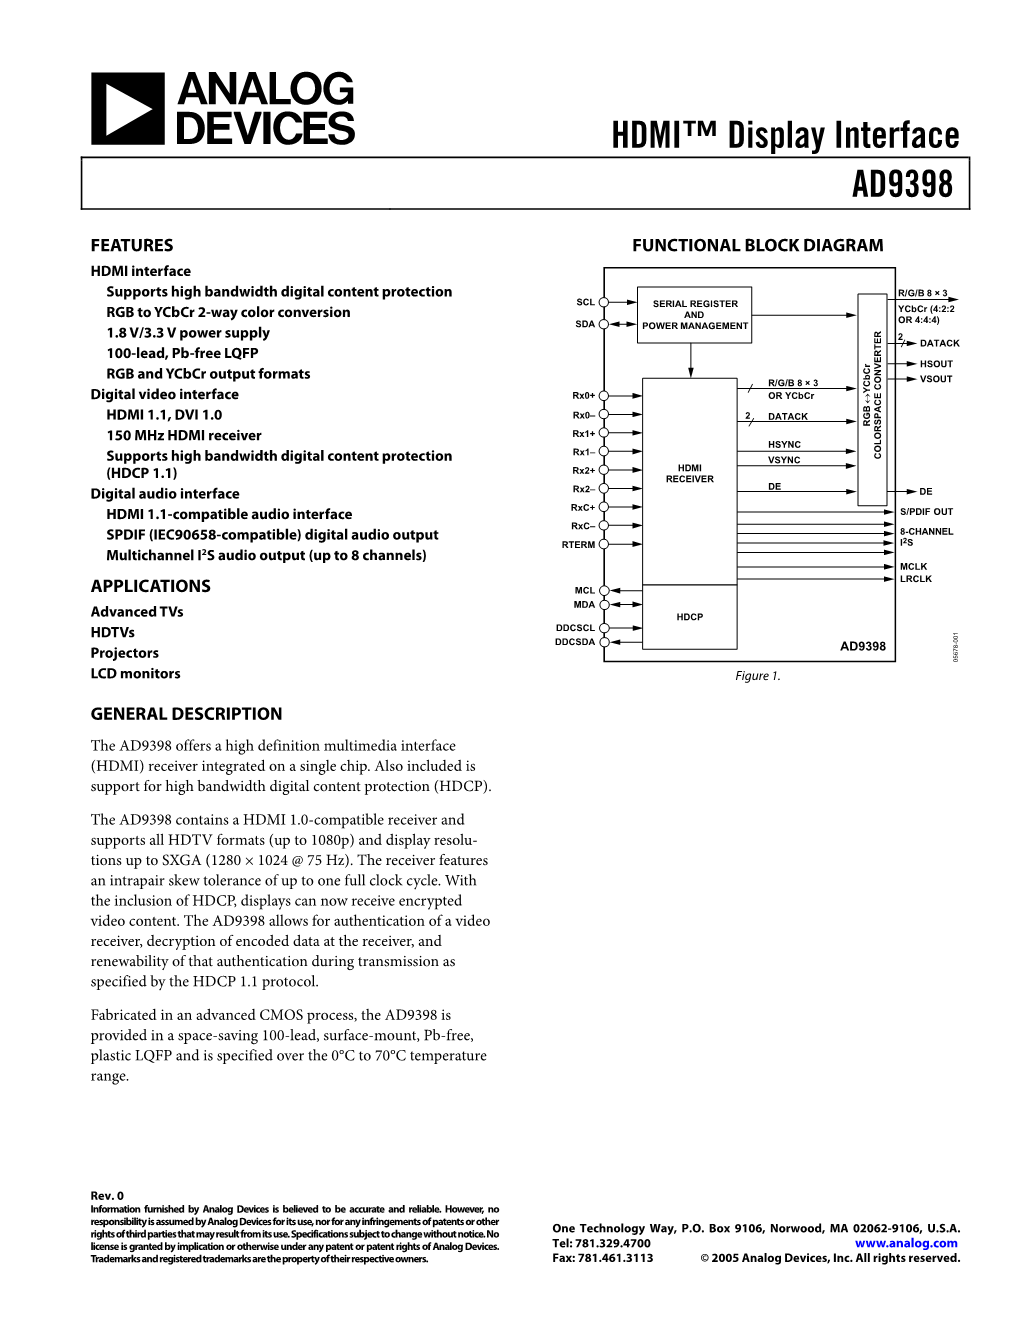 AD9398 HDMI™ Display Interface Data Sheet (Rev. 0)